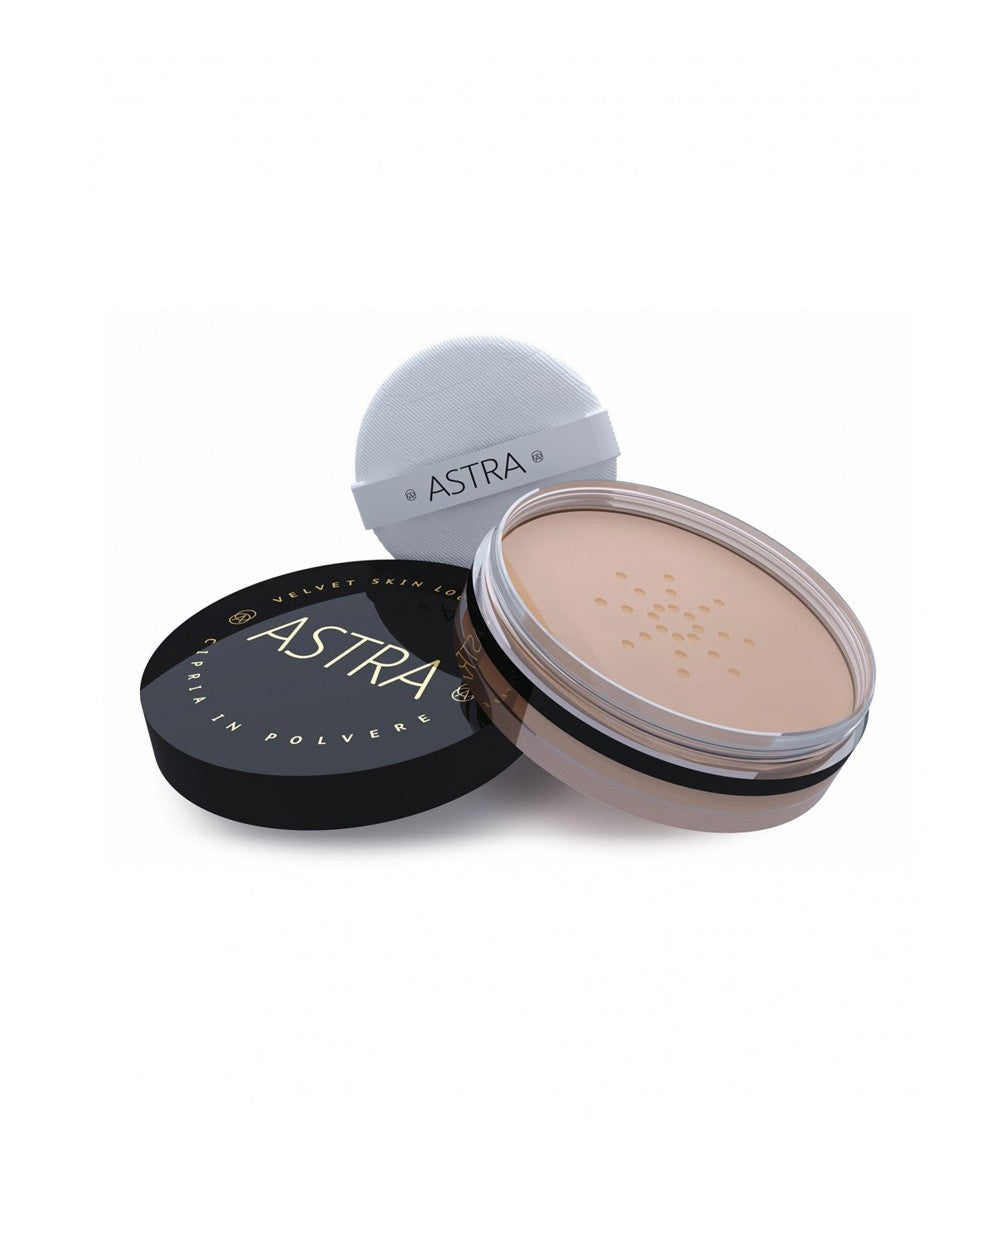 Astra Velvet Skin Loose Powder Cipria In Polvere - RossoLaccaStore